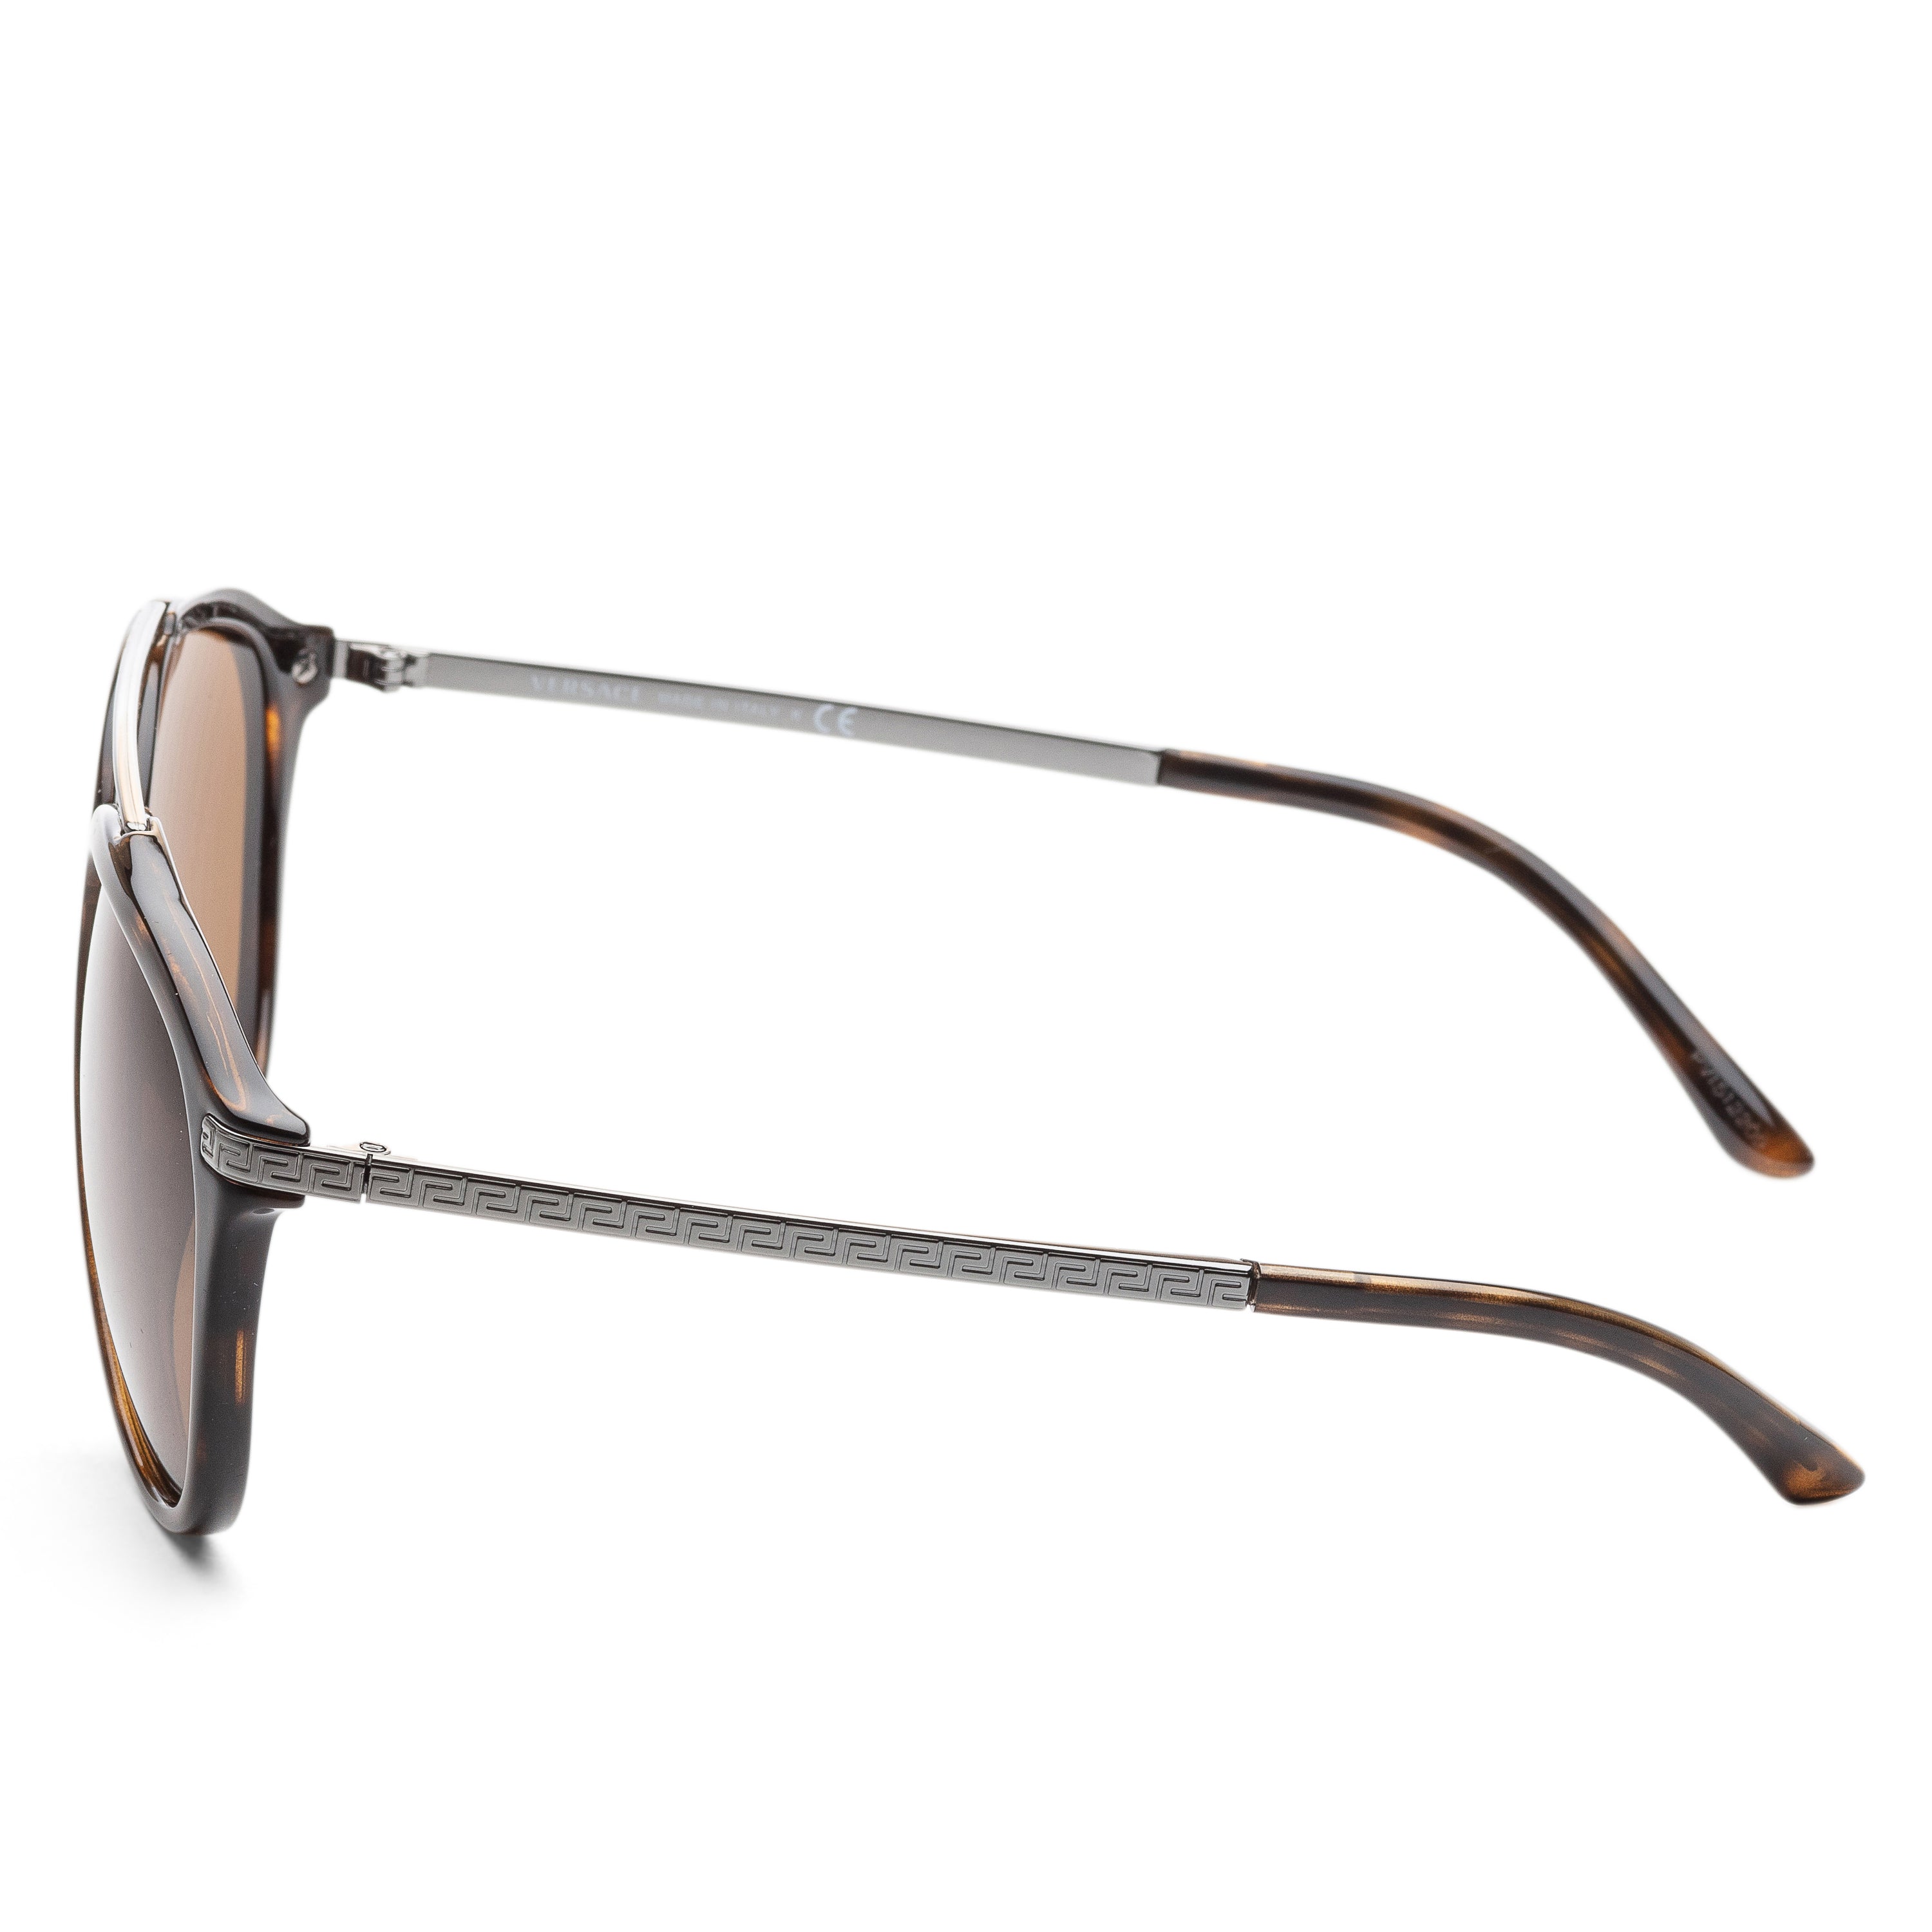 title:Versace Men's VE4299-108-73 Fashion 58mm Havana Sunglasses;color:Havana Frame, Brown Lens